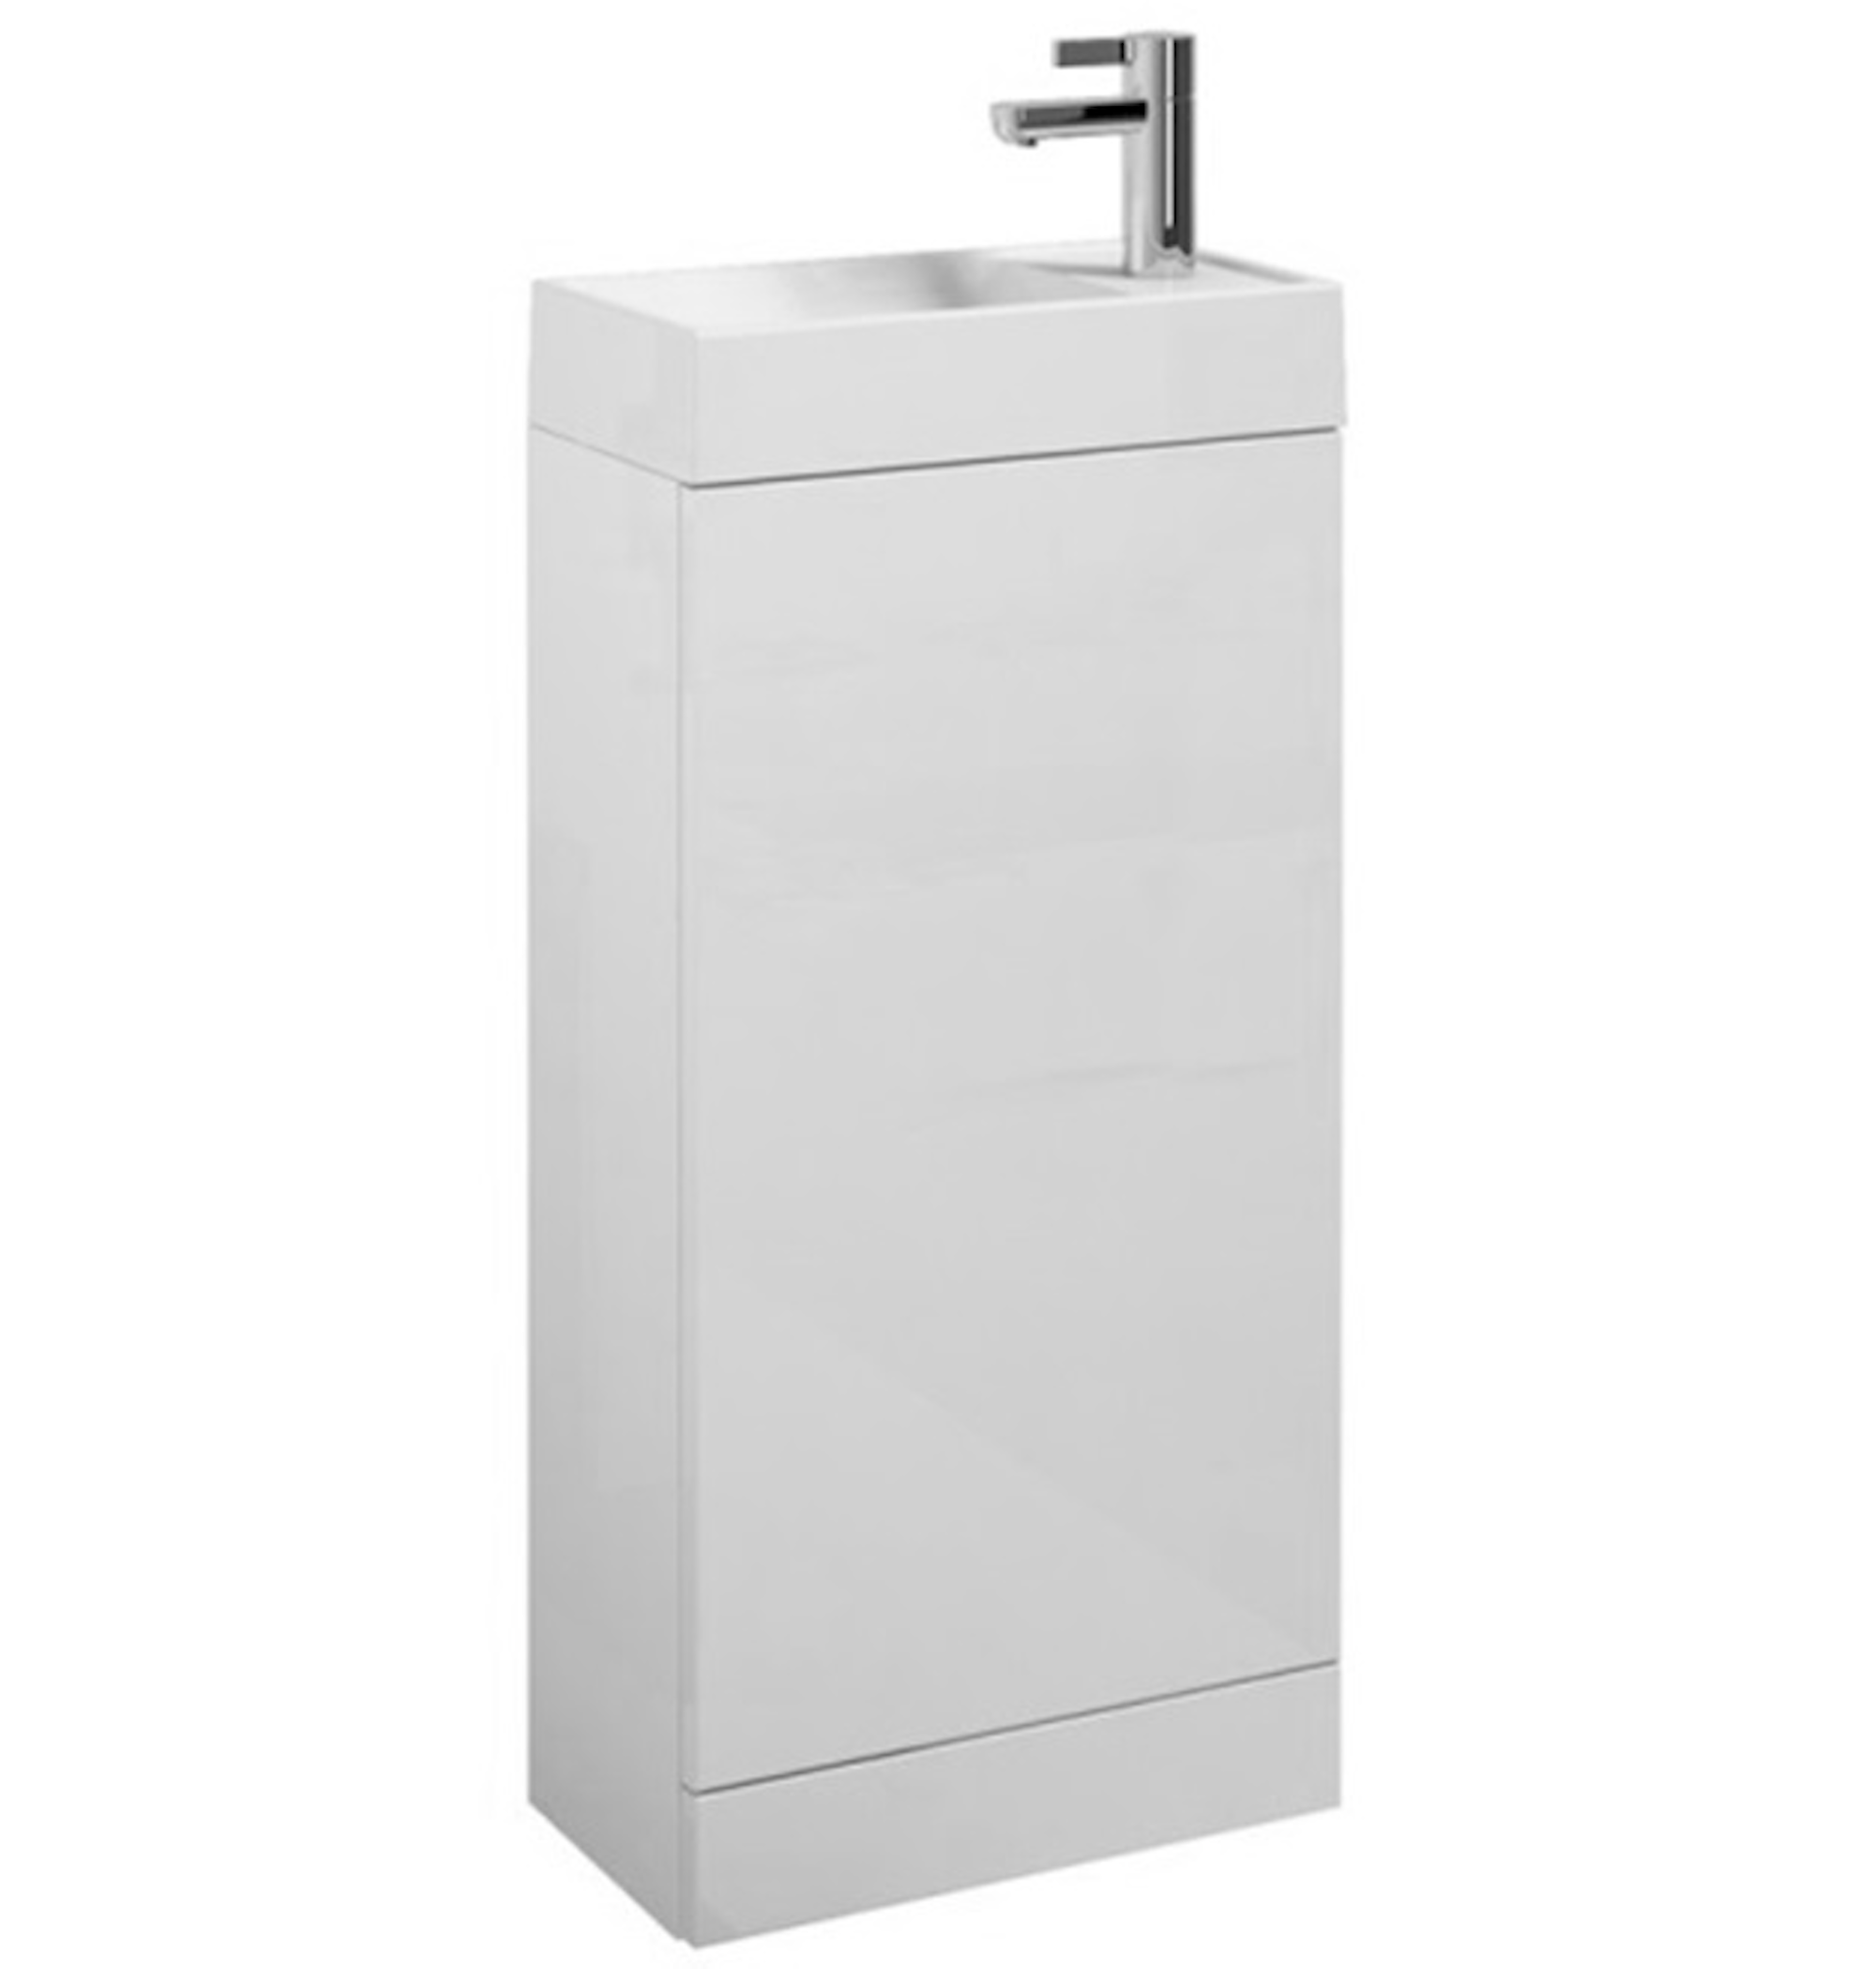 QUADRO 40x22cm washbasin 1TH & 1 door floor standing unit - Gloss White